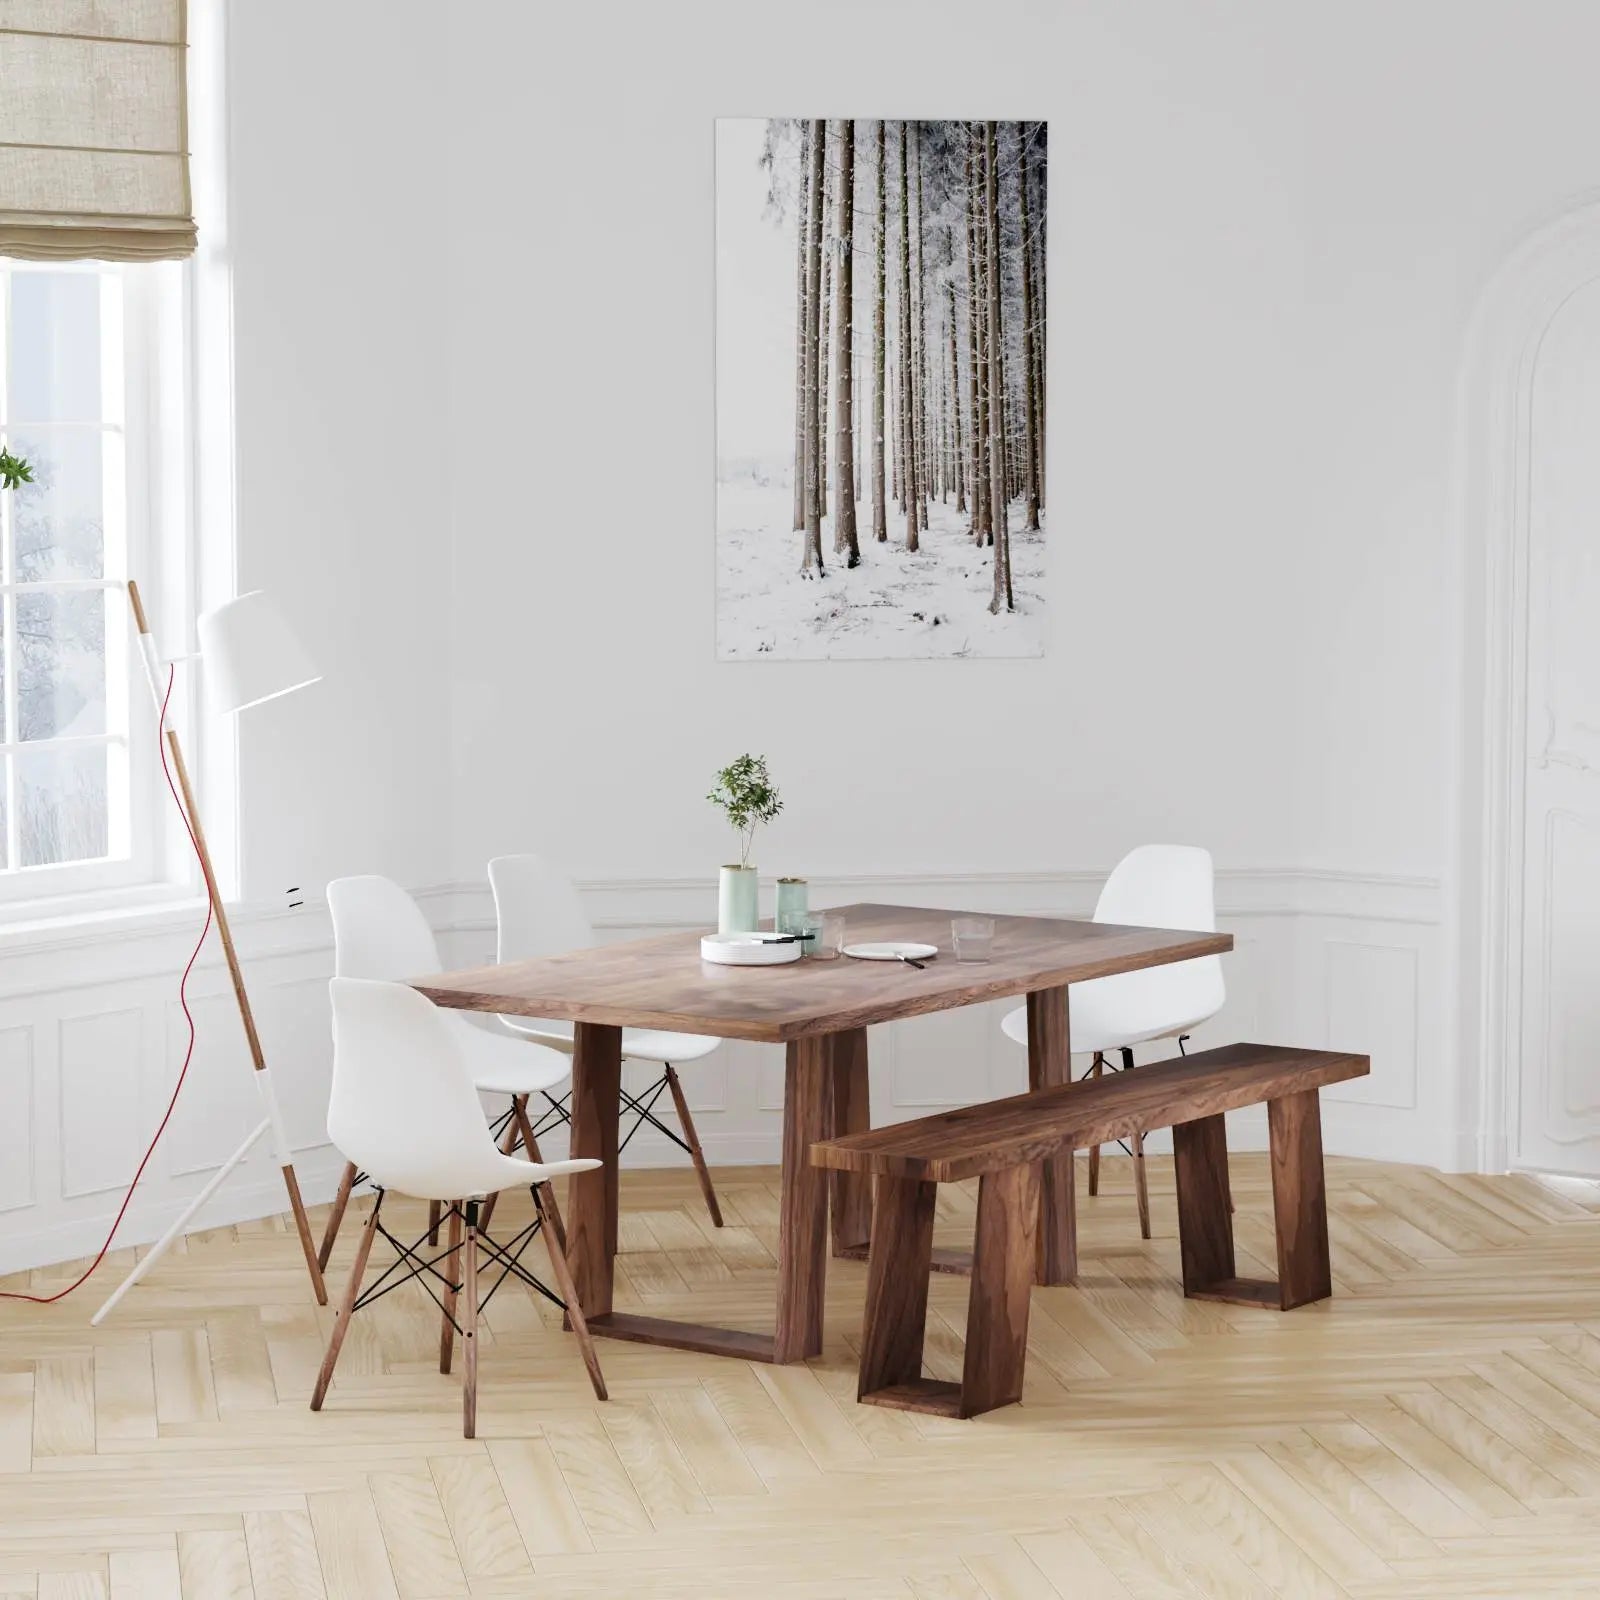 White Oak Dining Table - The Capri Moderncre8ve